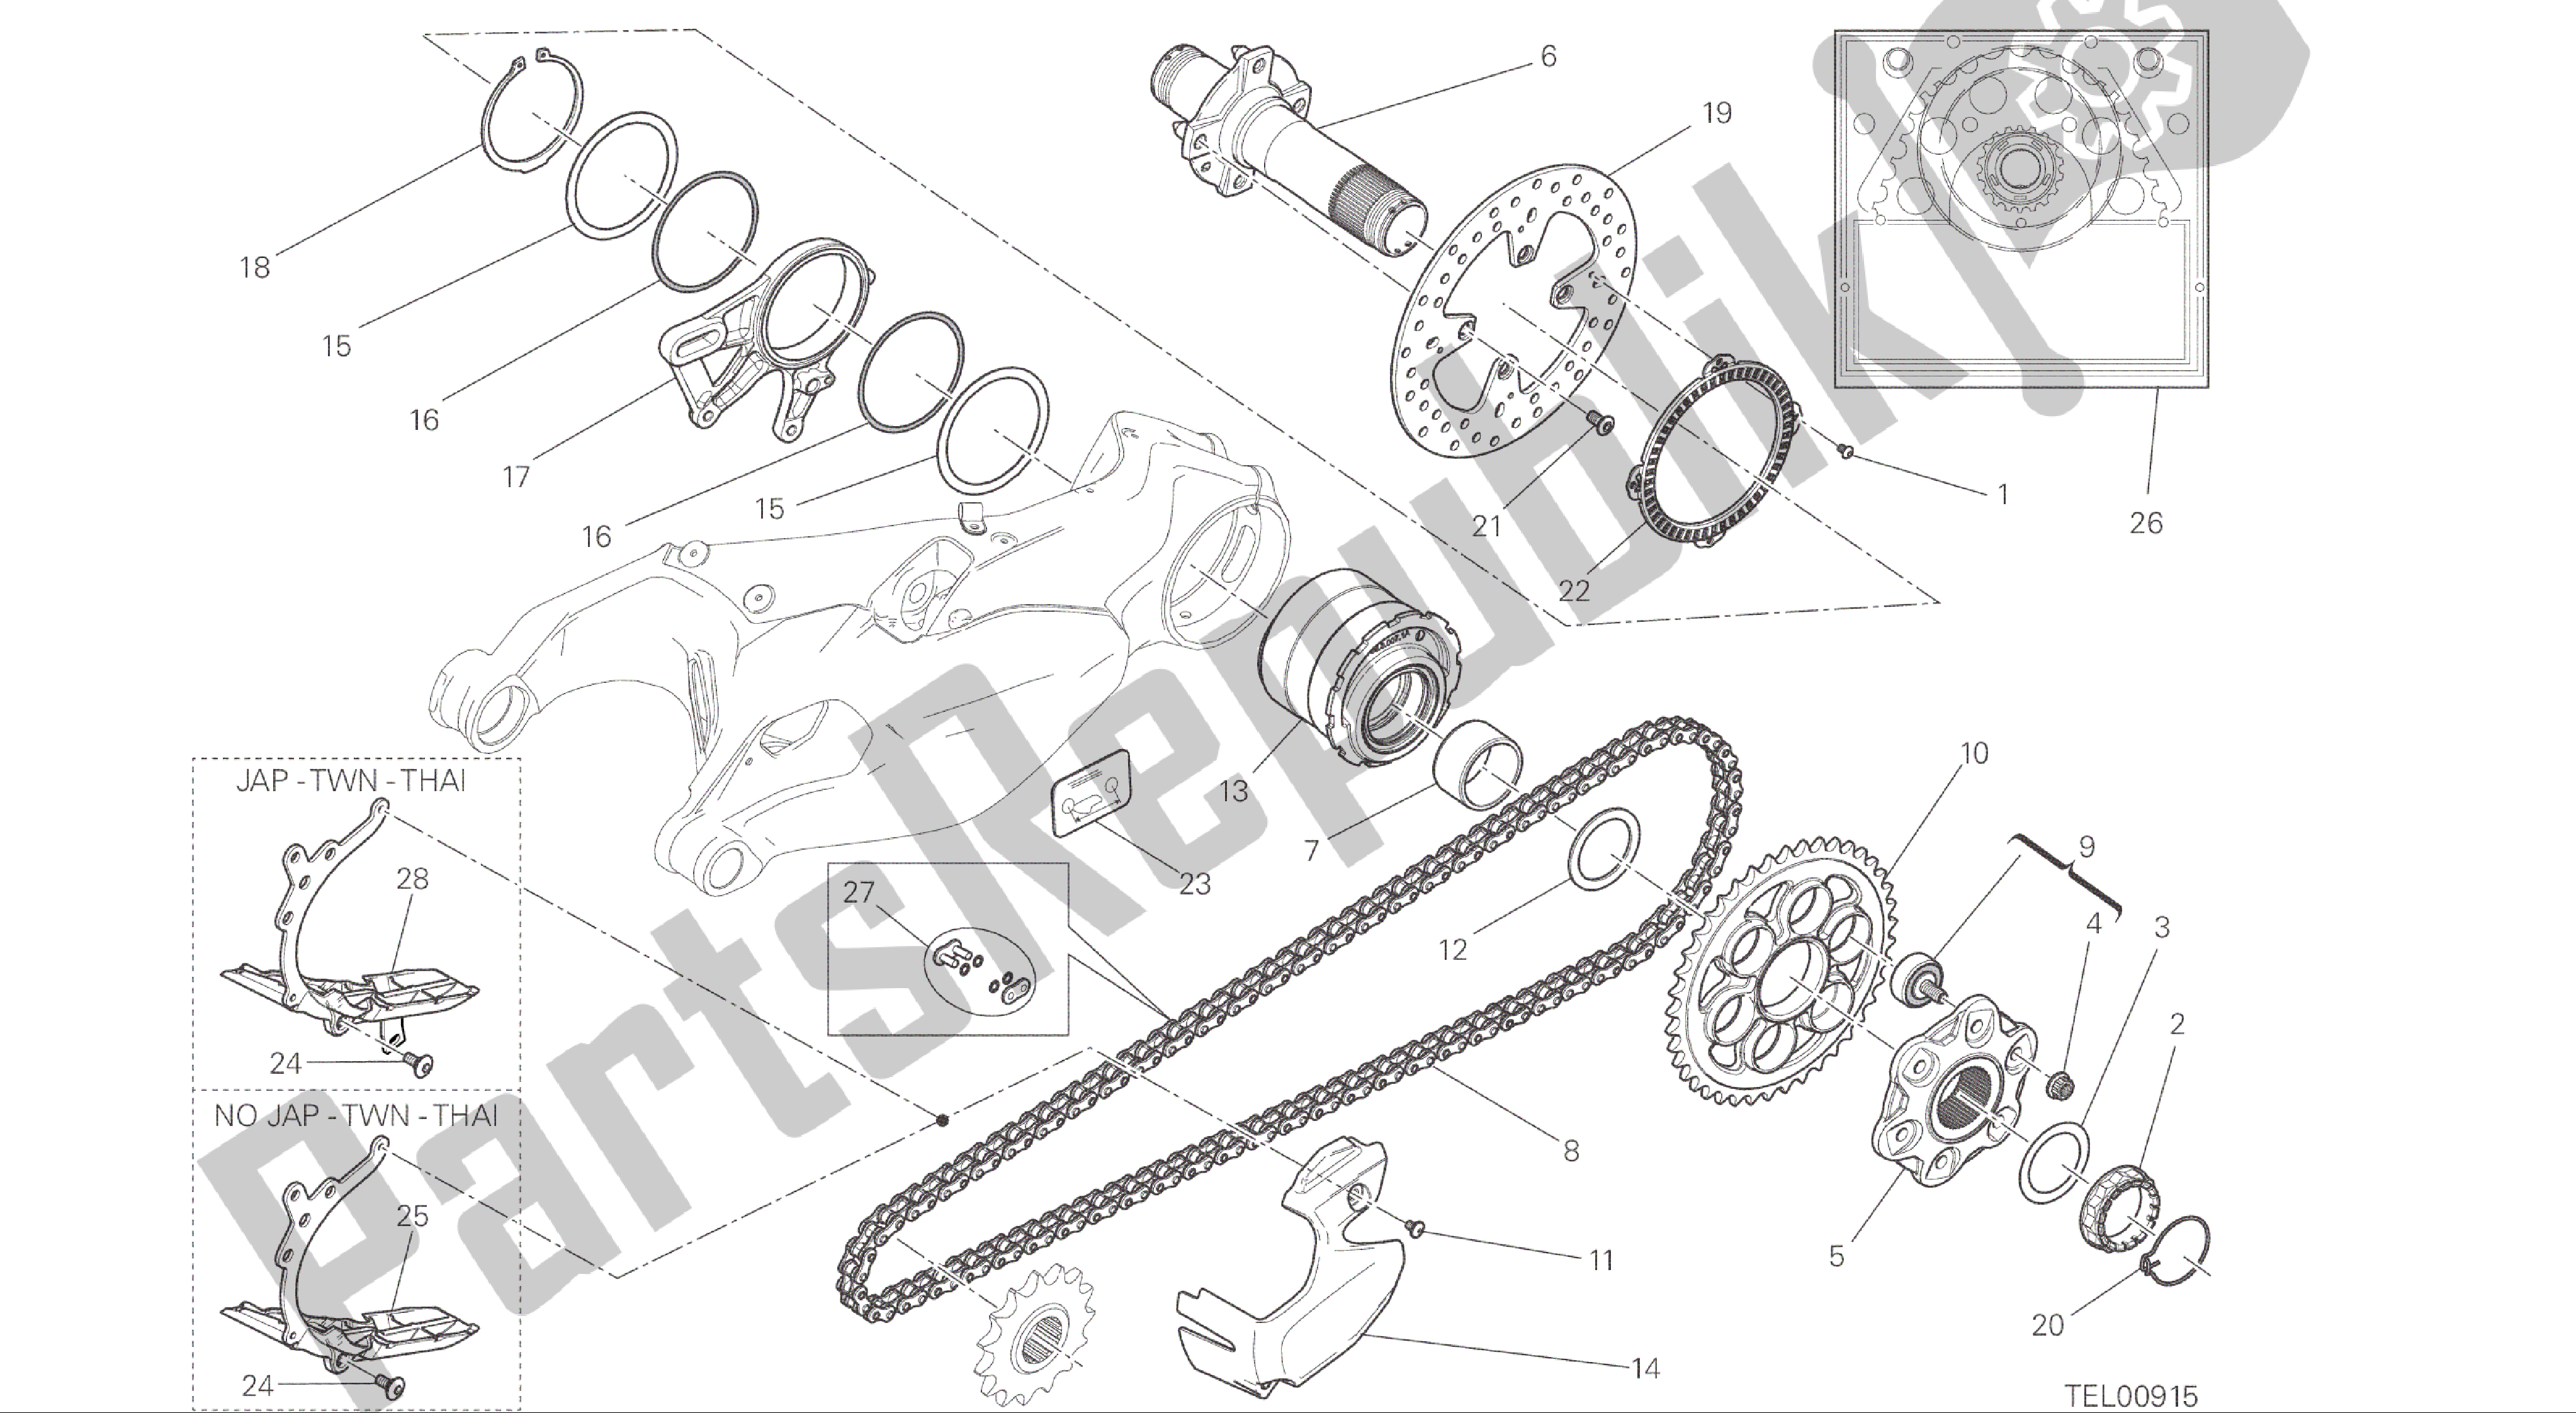 Alle onderdelen voor de Tekening 26a - Achterwielspindel [mod: 1299; Xst: Aus, Eur, Fra, Jap, Twn] Groepsframe van de Ducati Panigale ABS 1299 2016